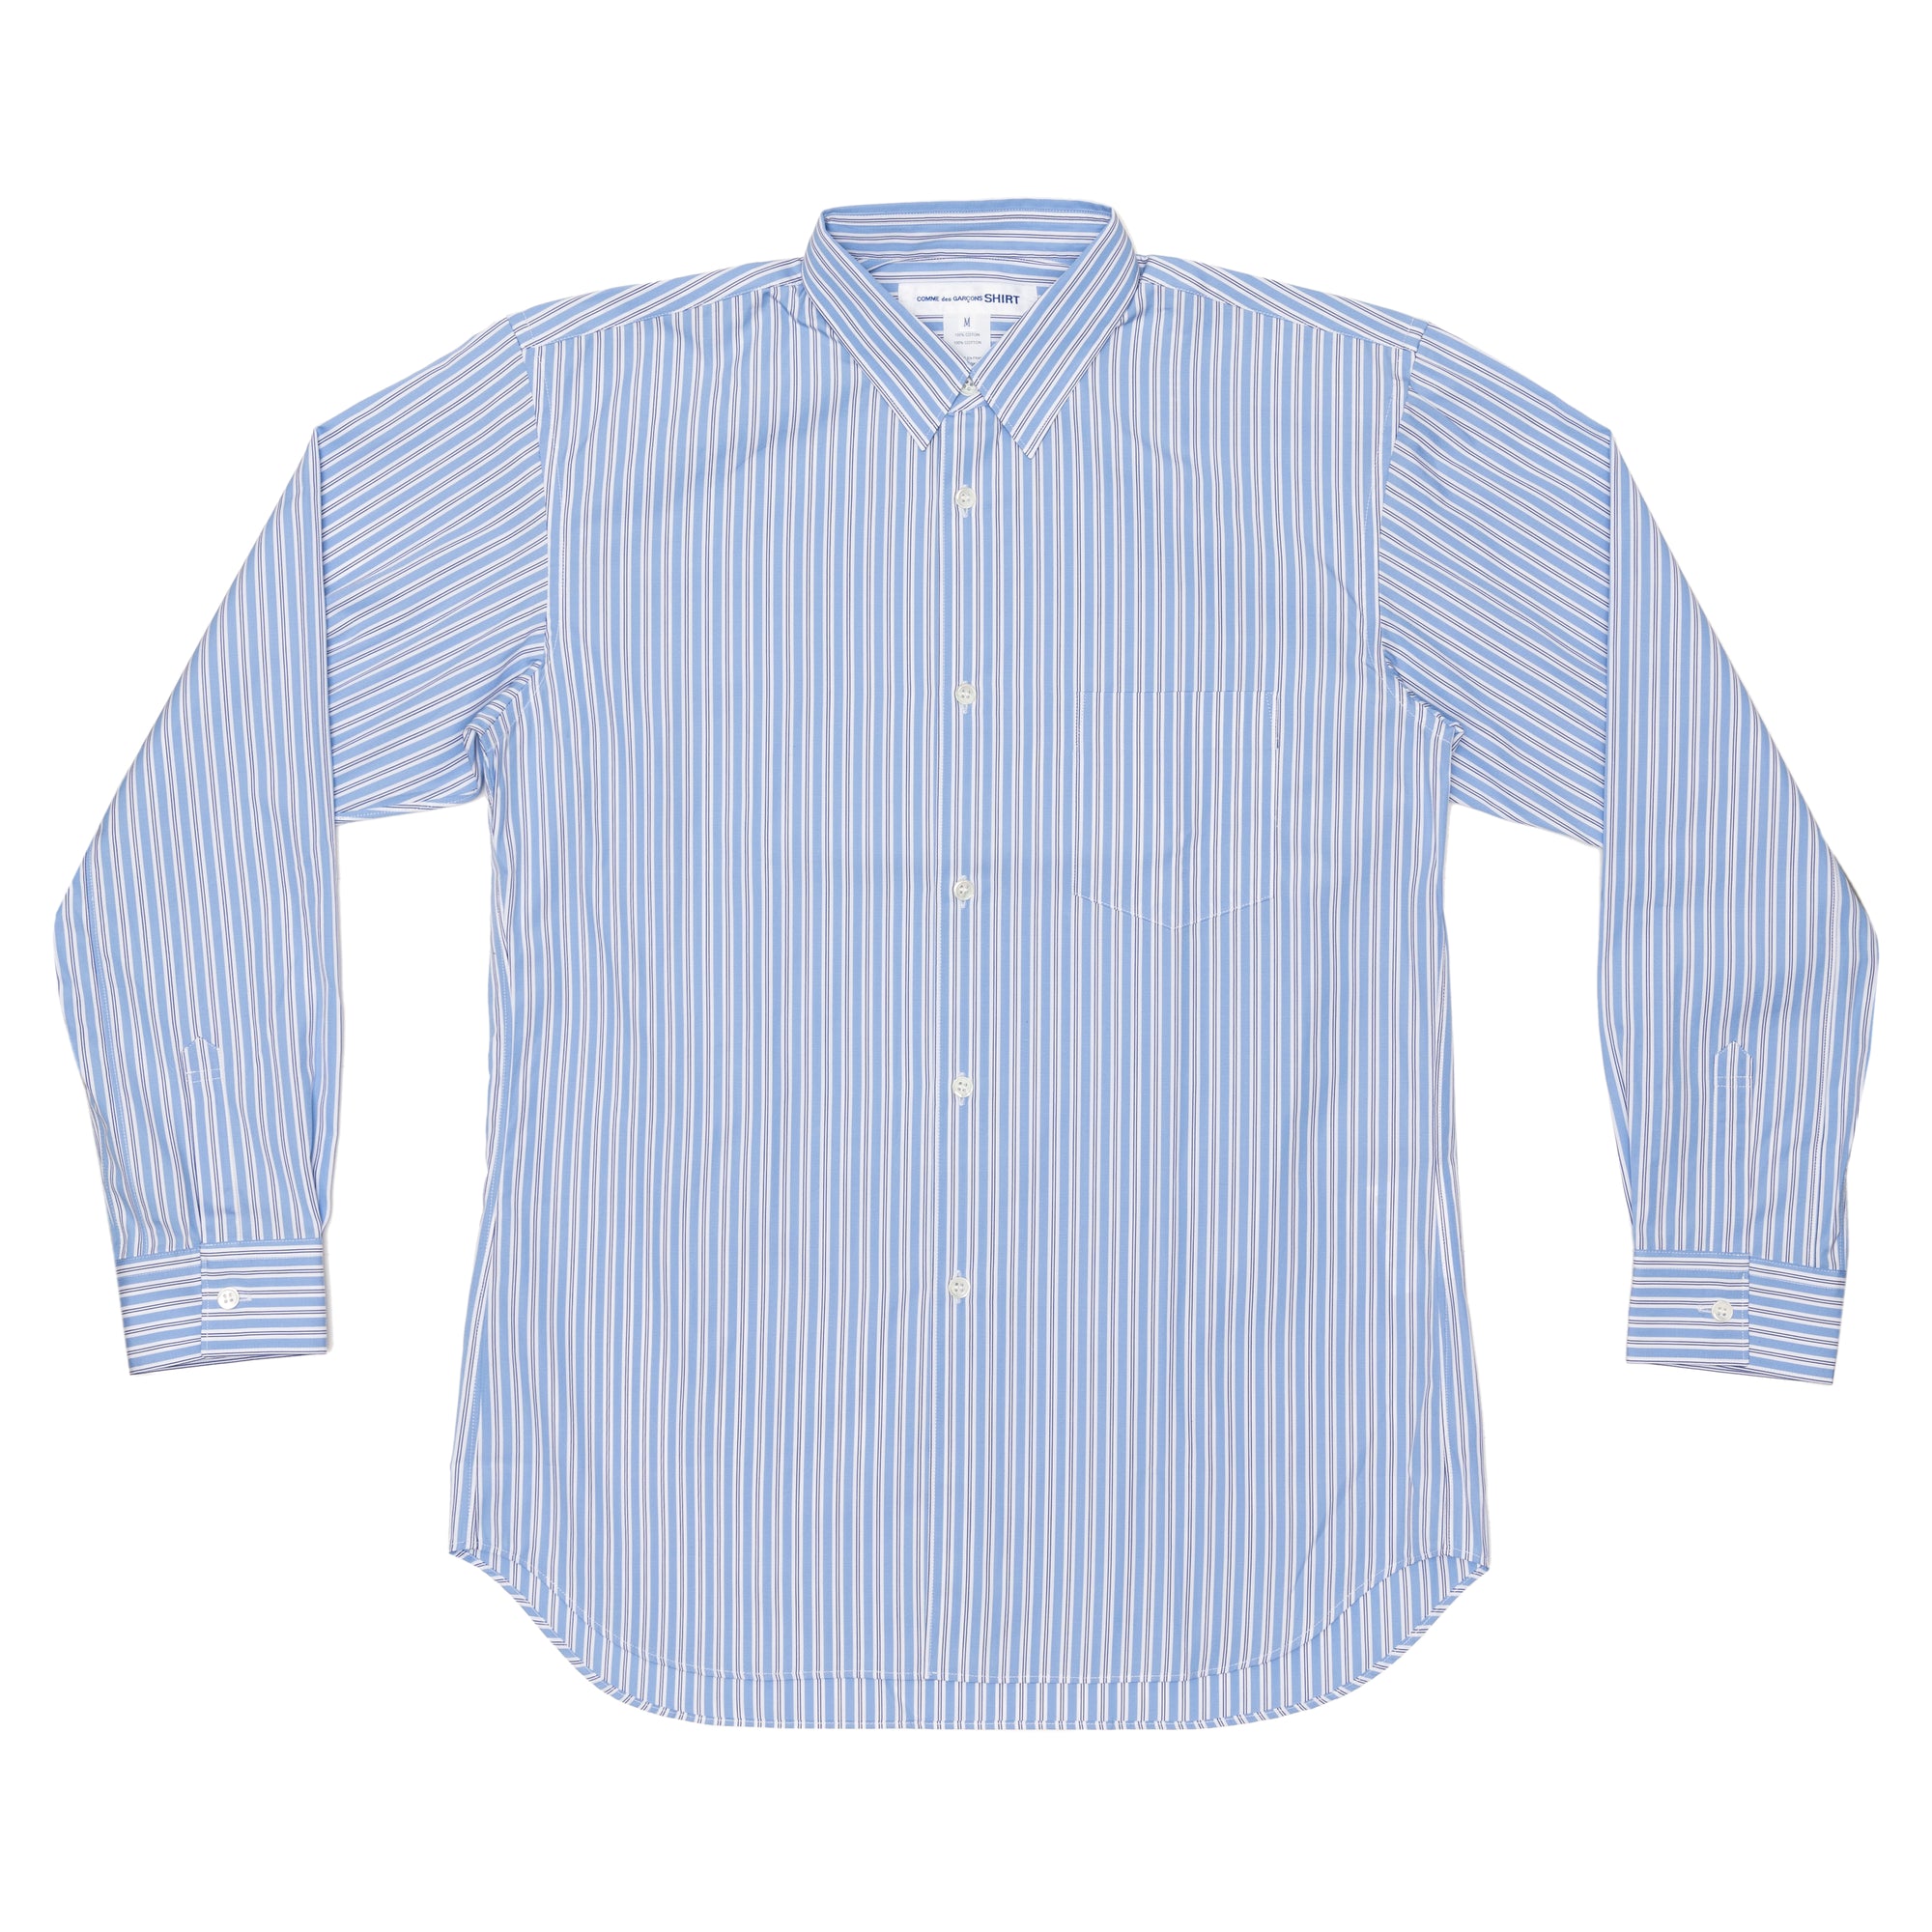 CDG SHIRT FOREVER - Yarn Dyed Cotton Poplin Narrow Classic Shirt - (Stripe11) view 1